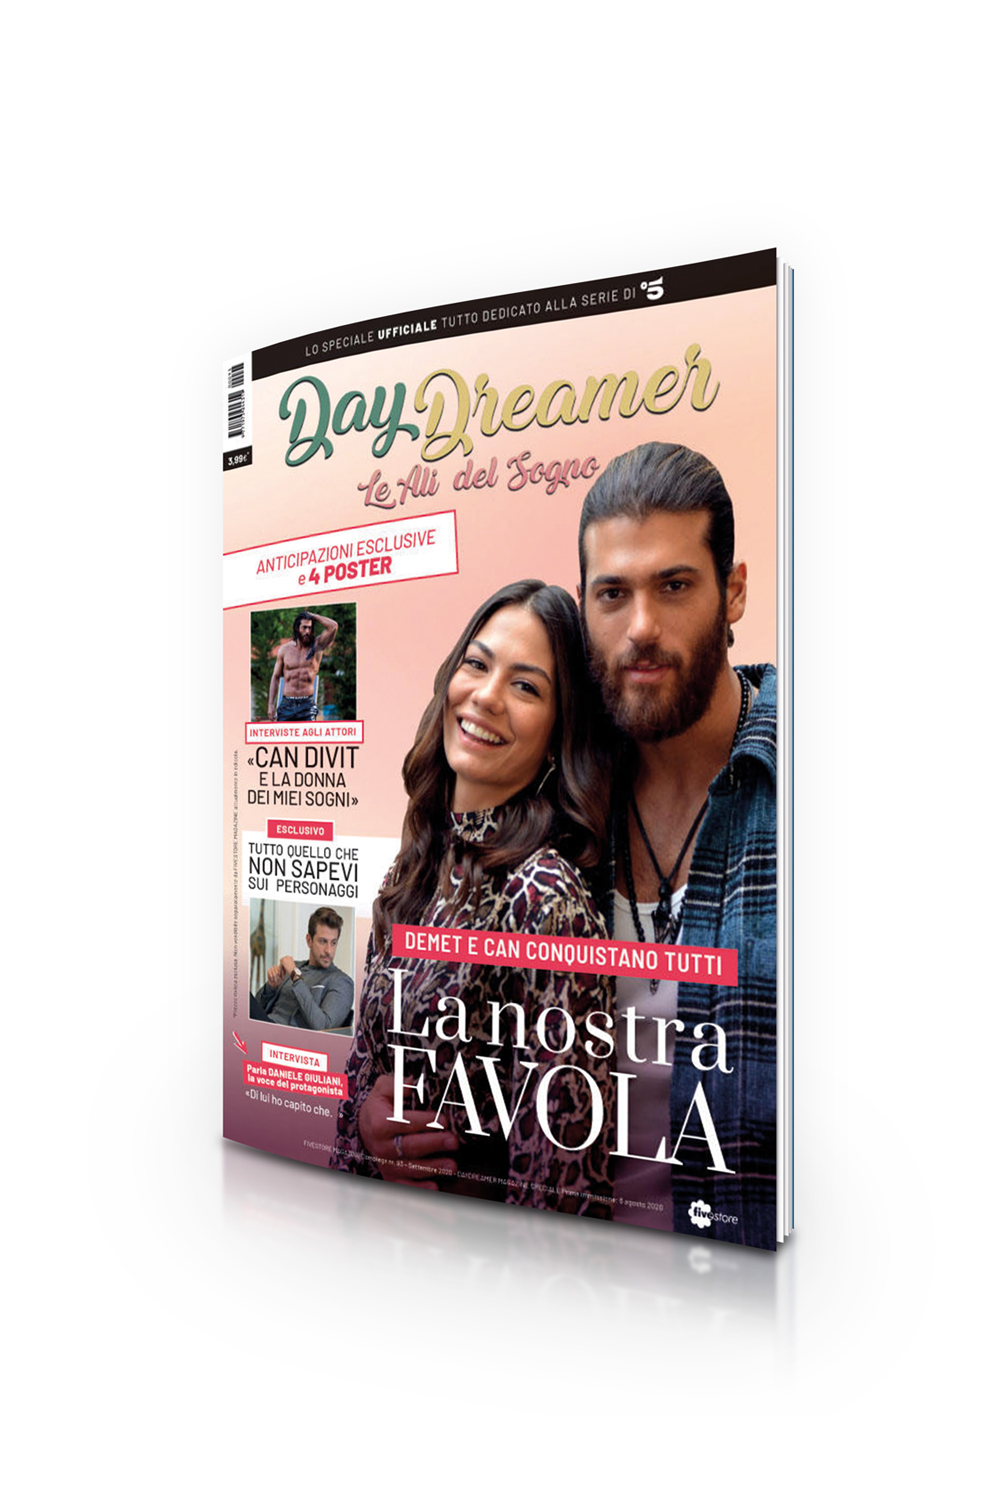 DayDreamer Magazine